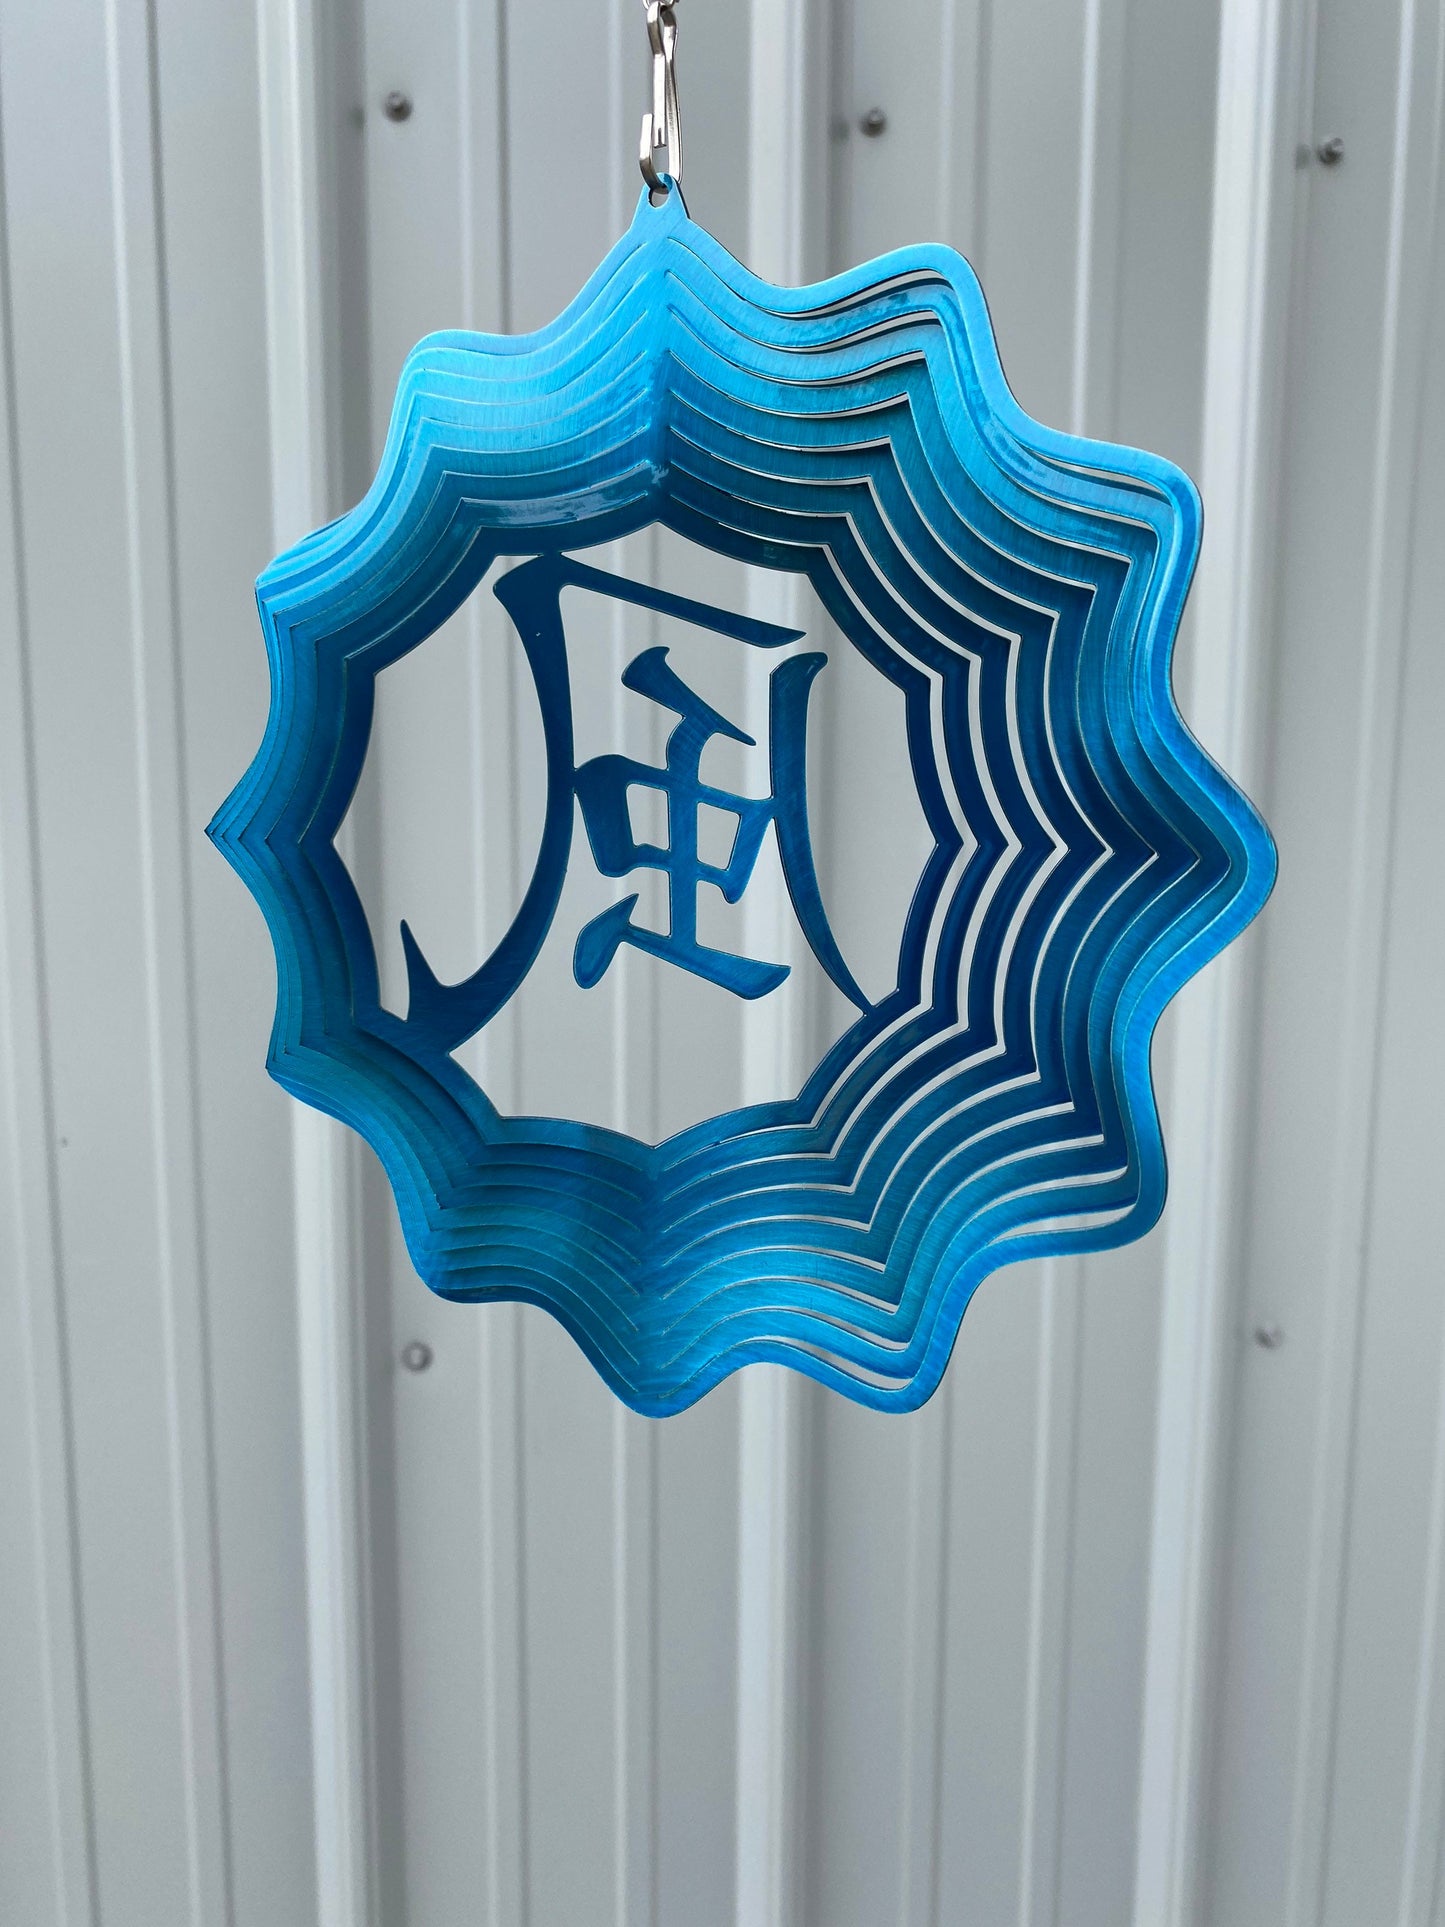 Japanese wind symbol metal art wind spinner, gift for gardener, garden decorations, patio decorations